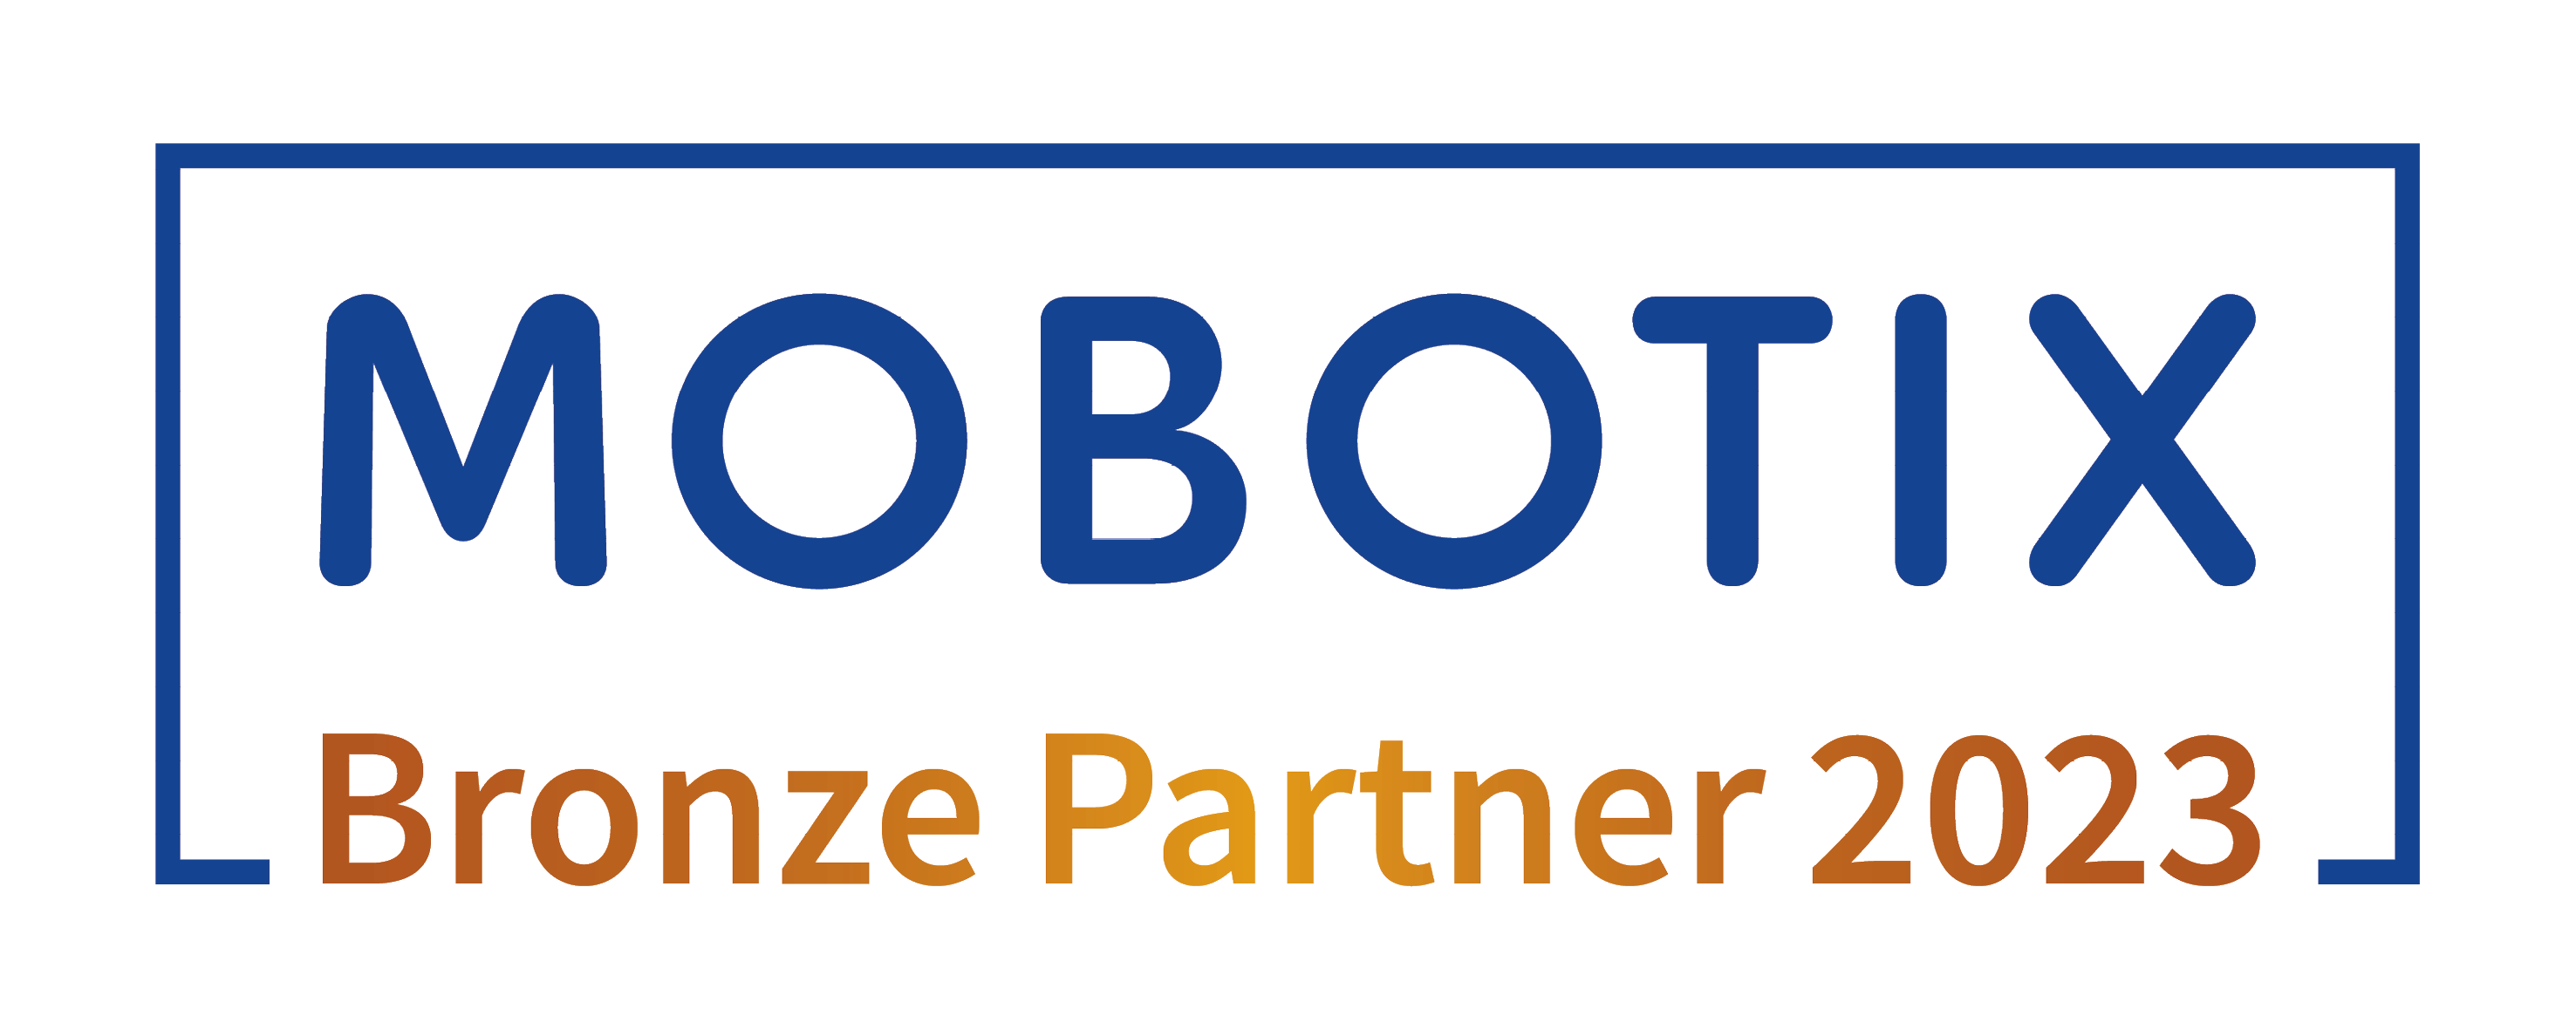 mobotix_partner_logo_2023_bronze-2